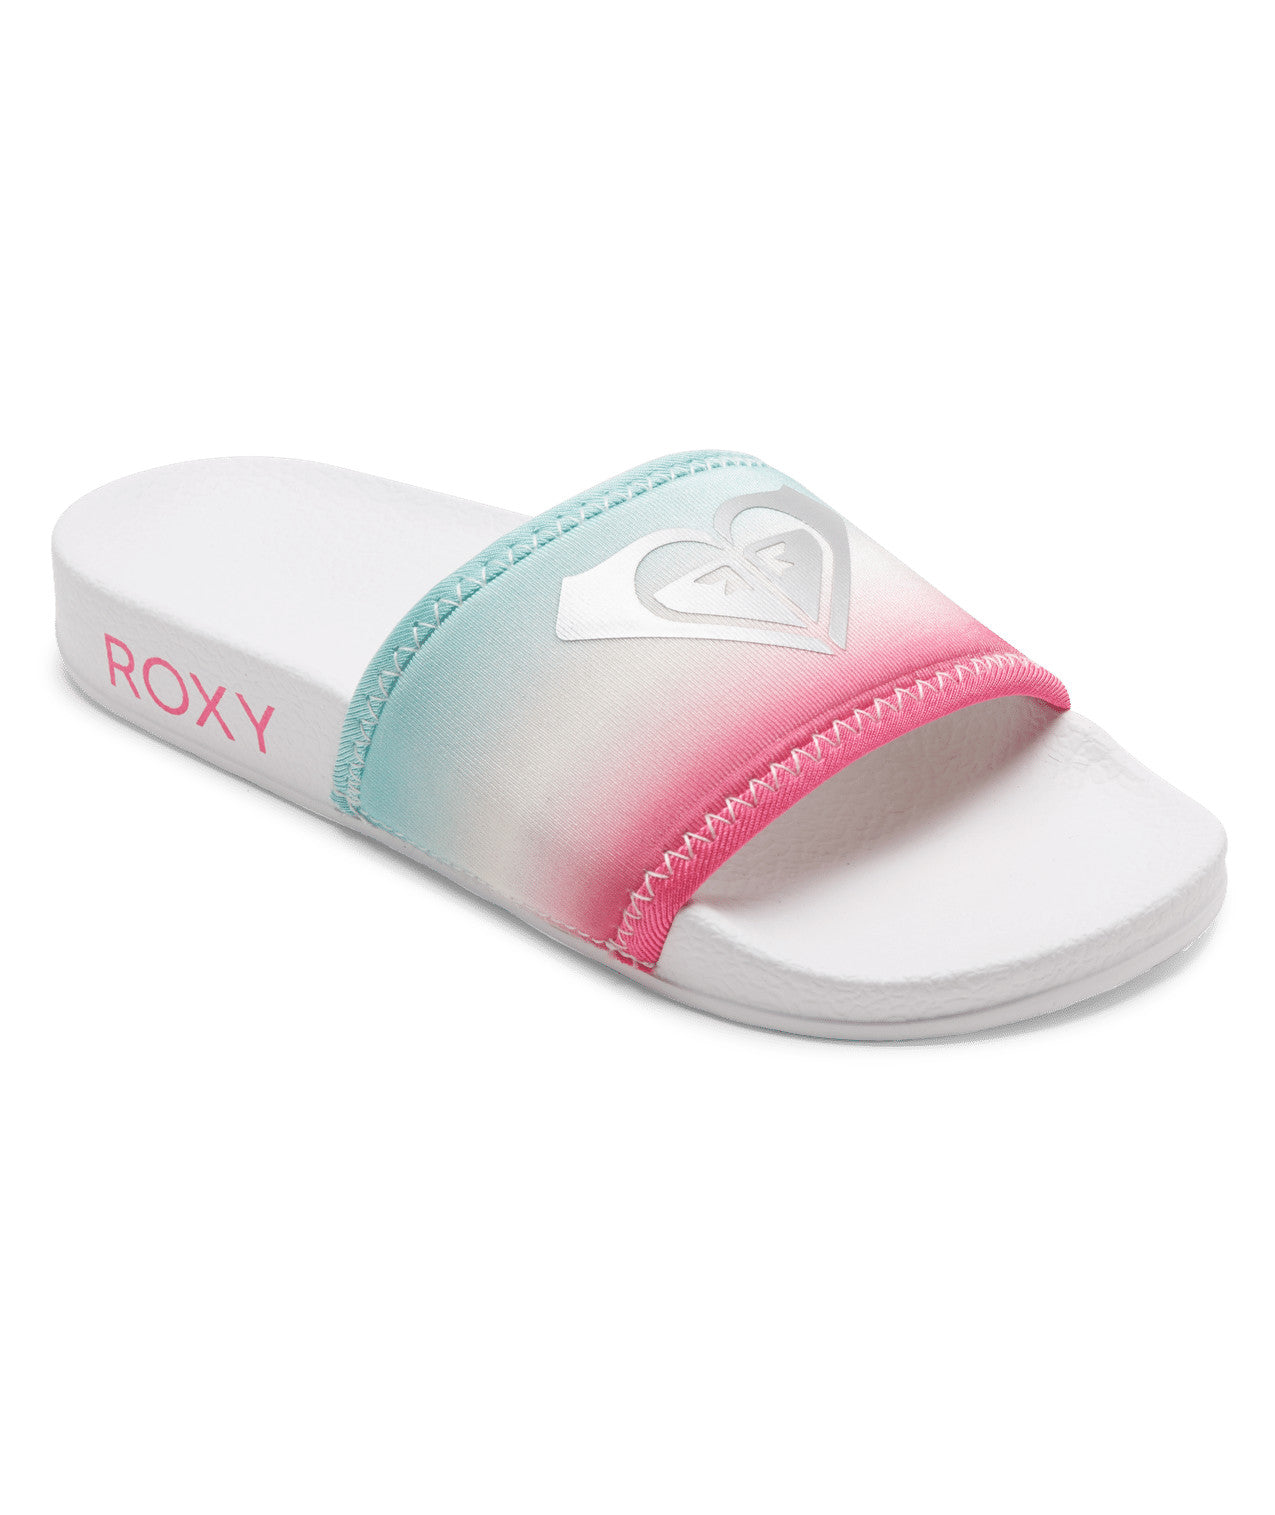 Roxy Slippy Neo Girls Sandal WCQ-White-Crazy Pink-Turquoise 2 Y